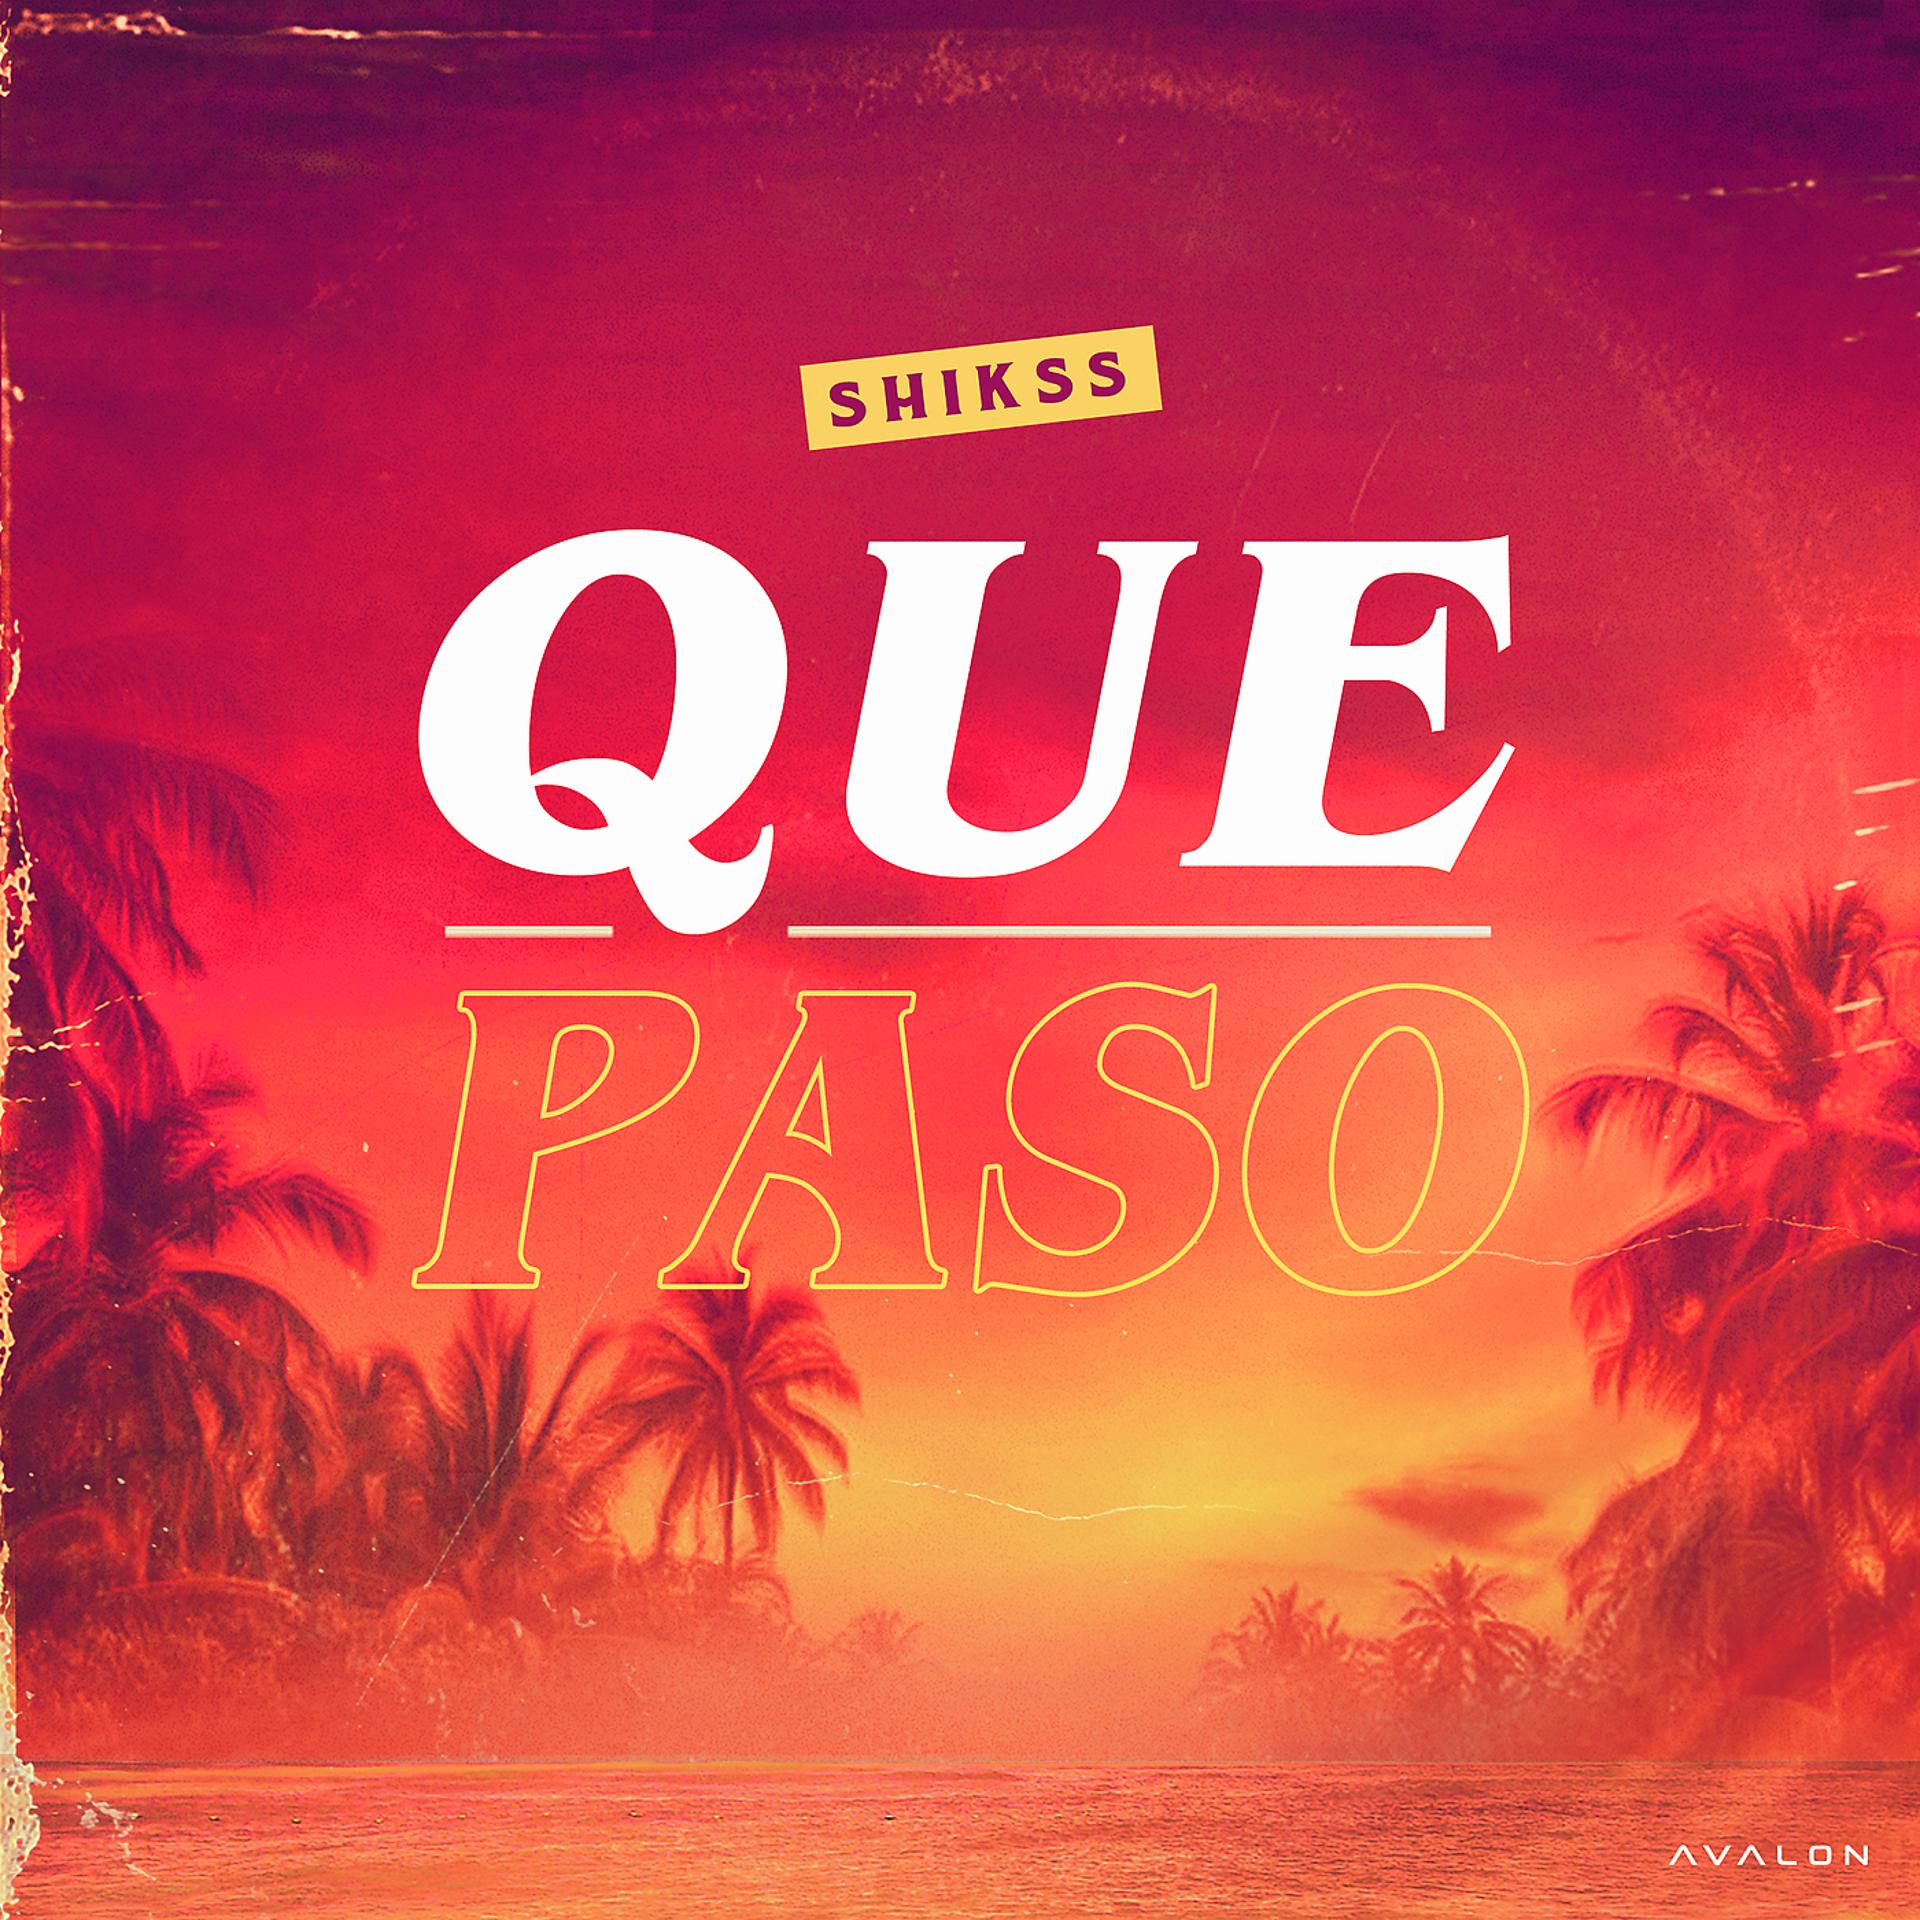 Постер альбома Que Paso